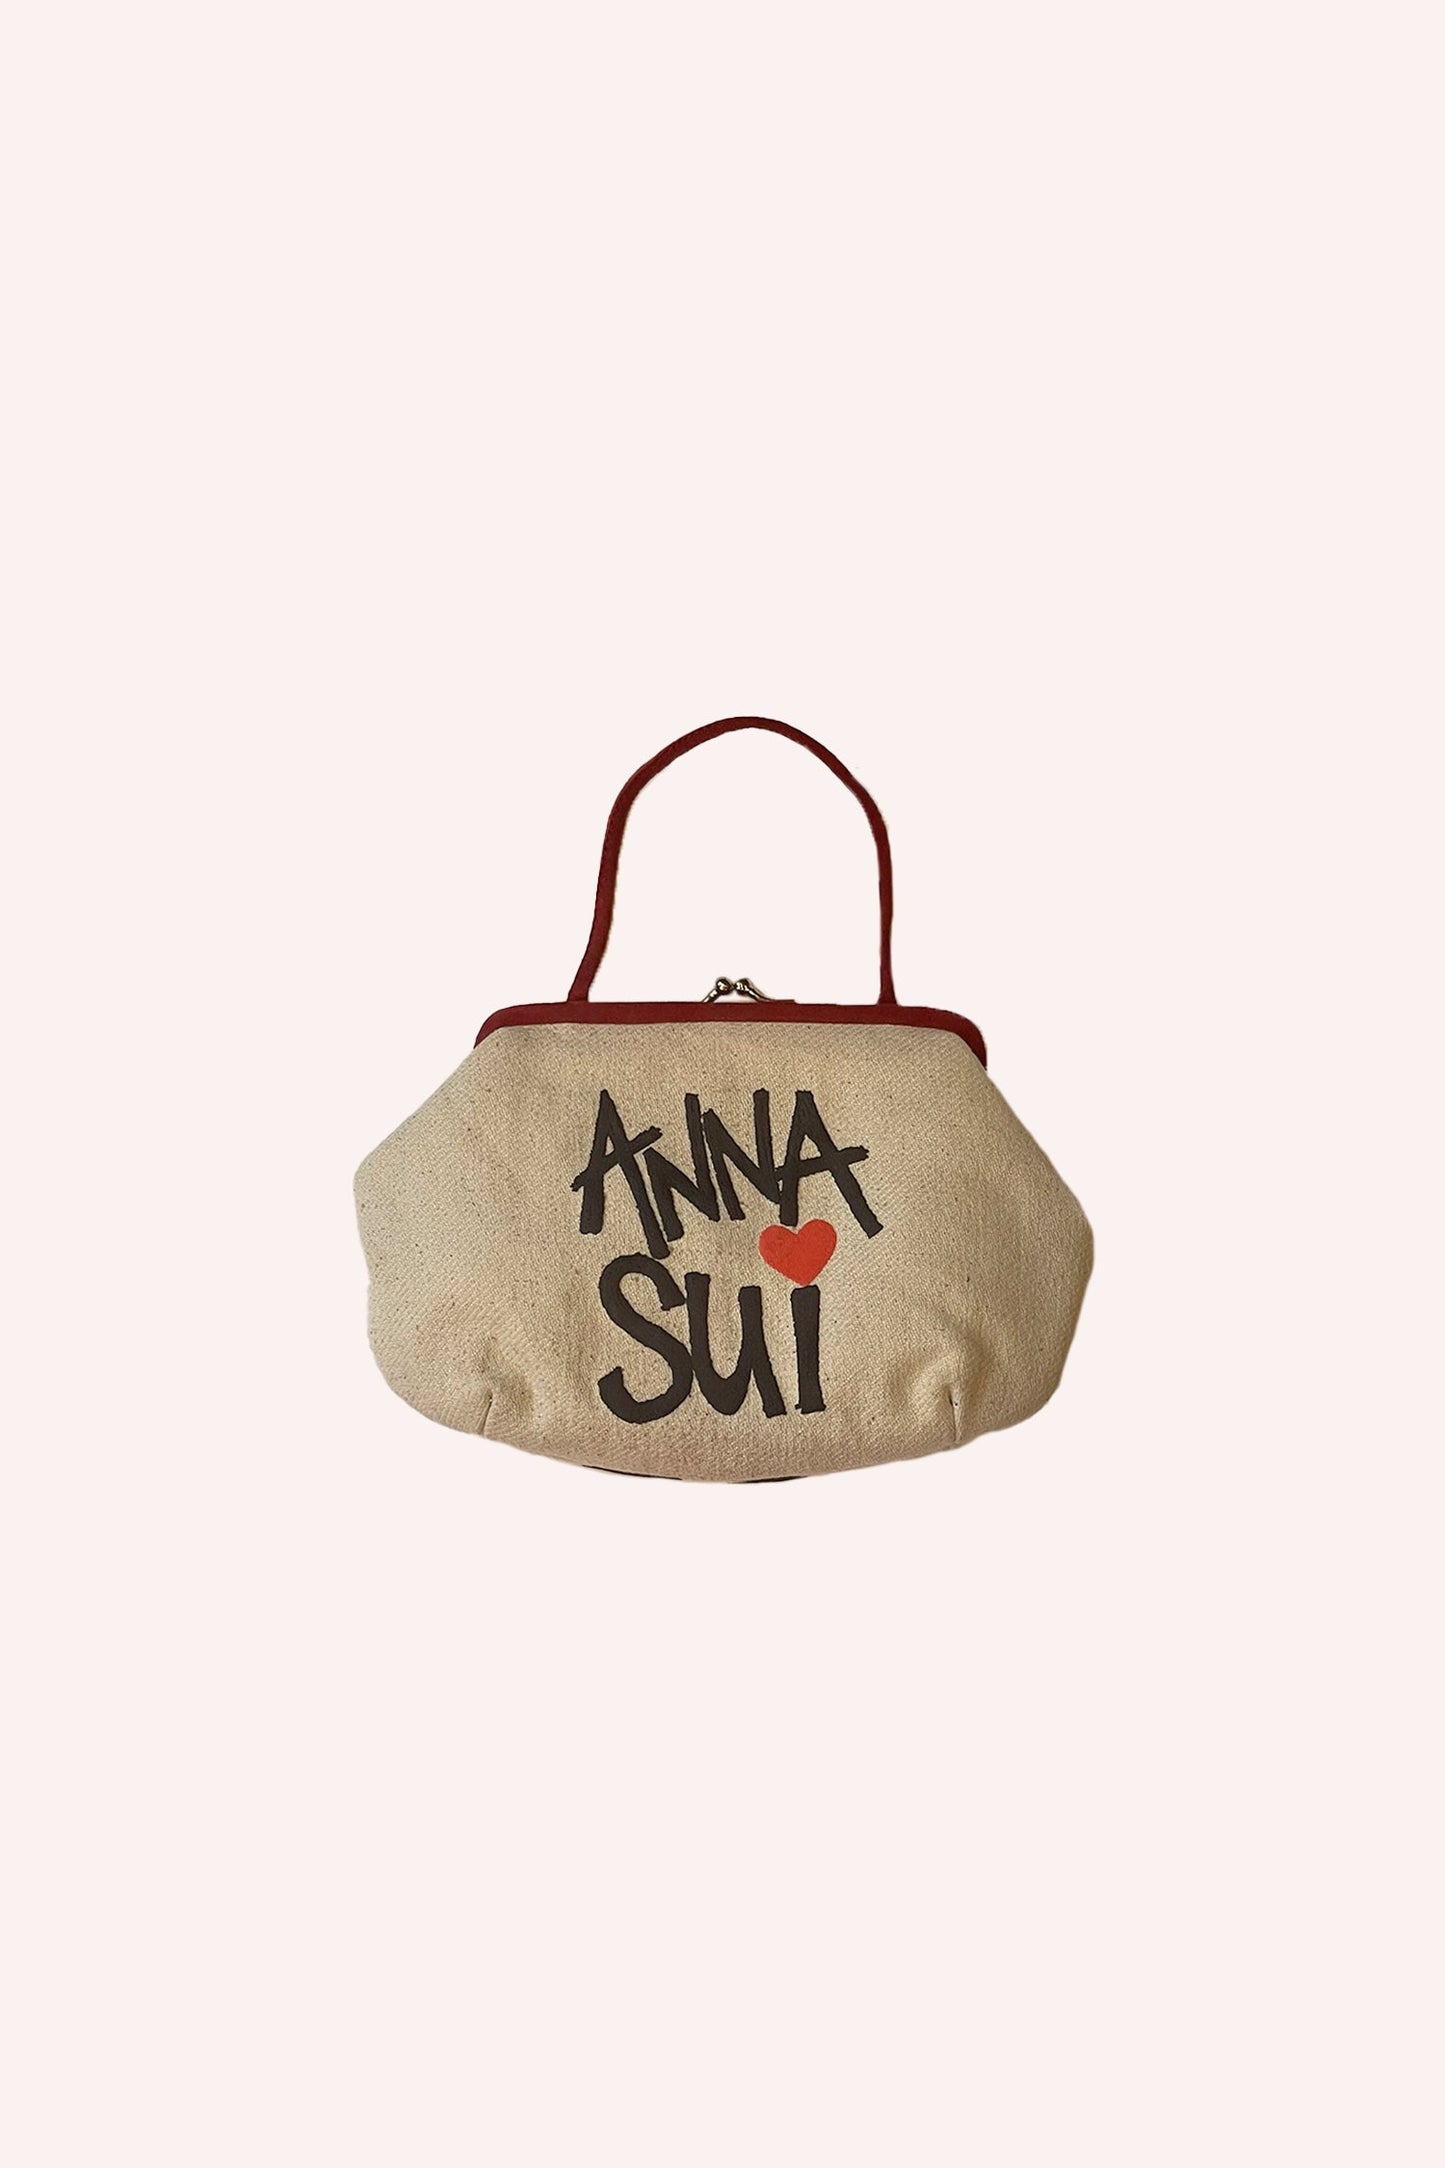 Mini purse light cream, Anna Sui branding on the other side